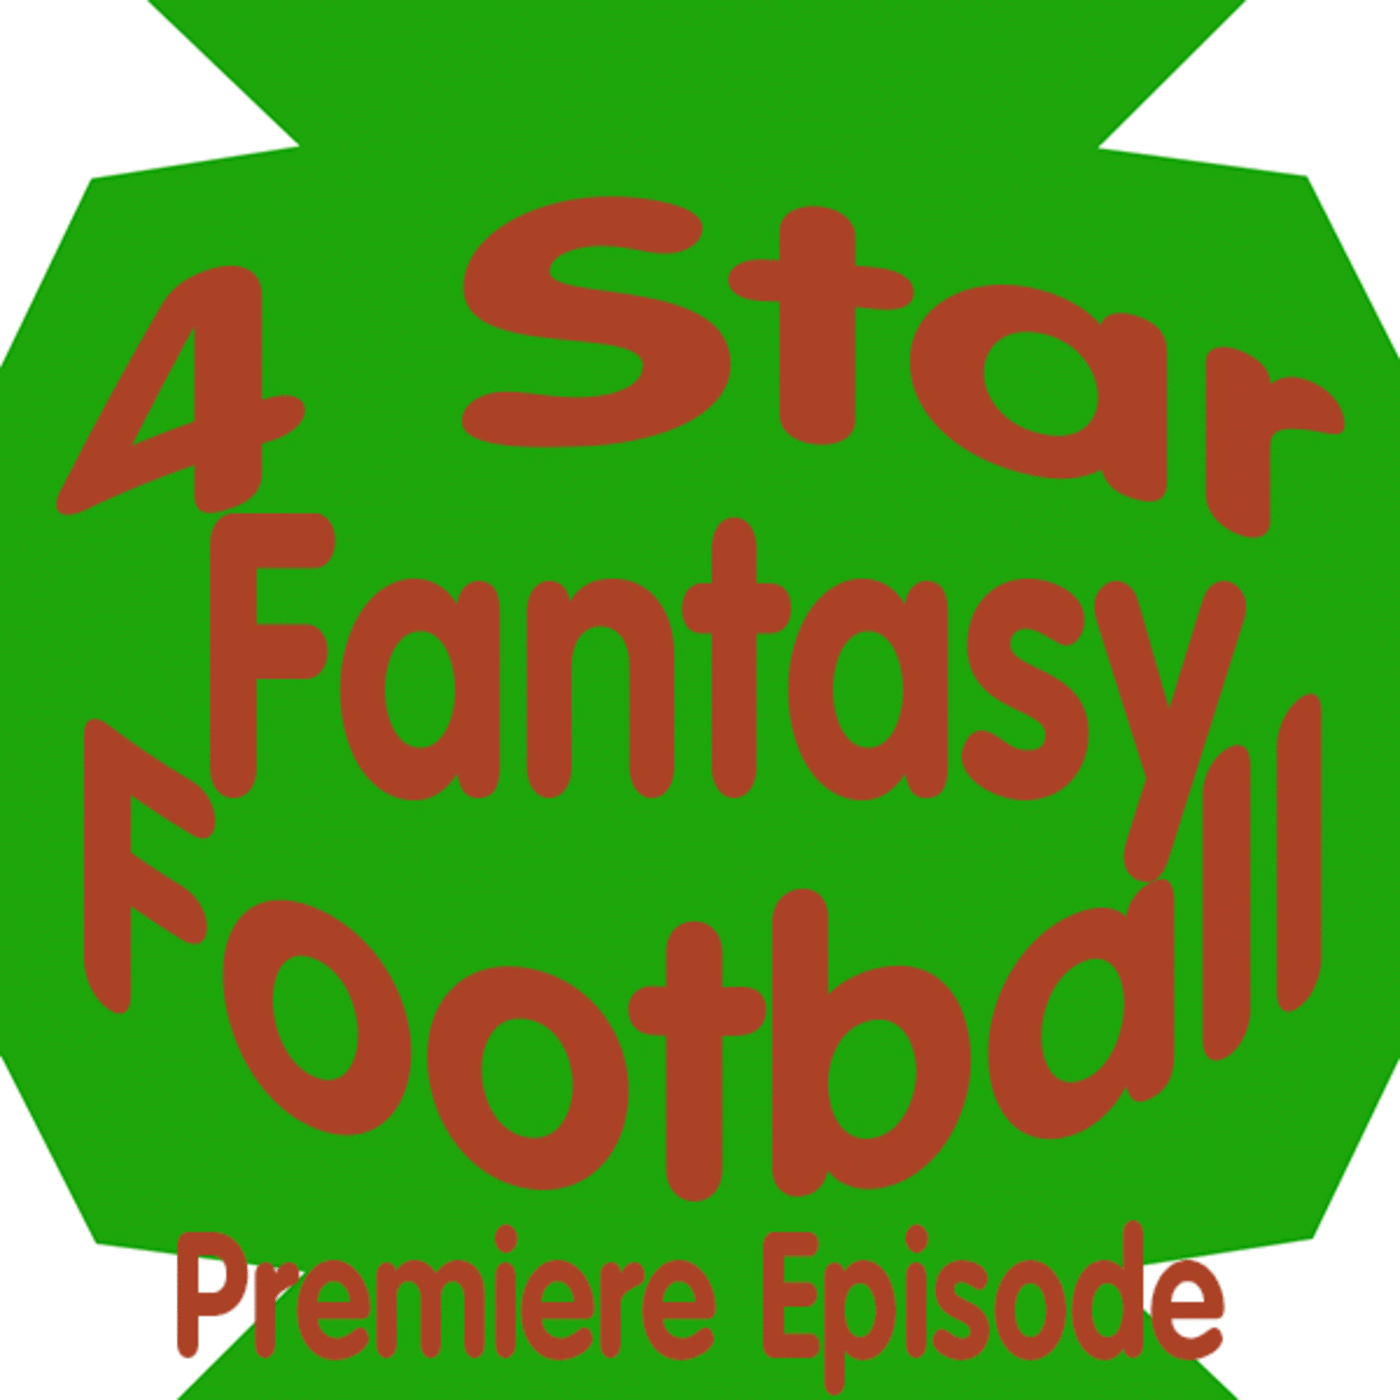 4 Star Fantasy Football Podcast